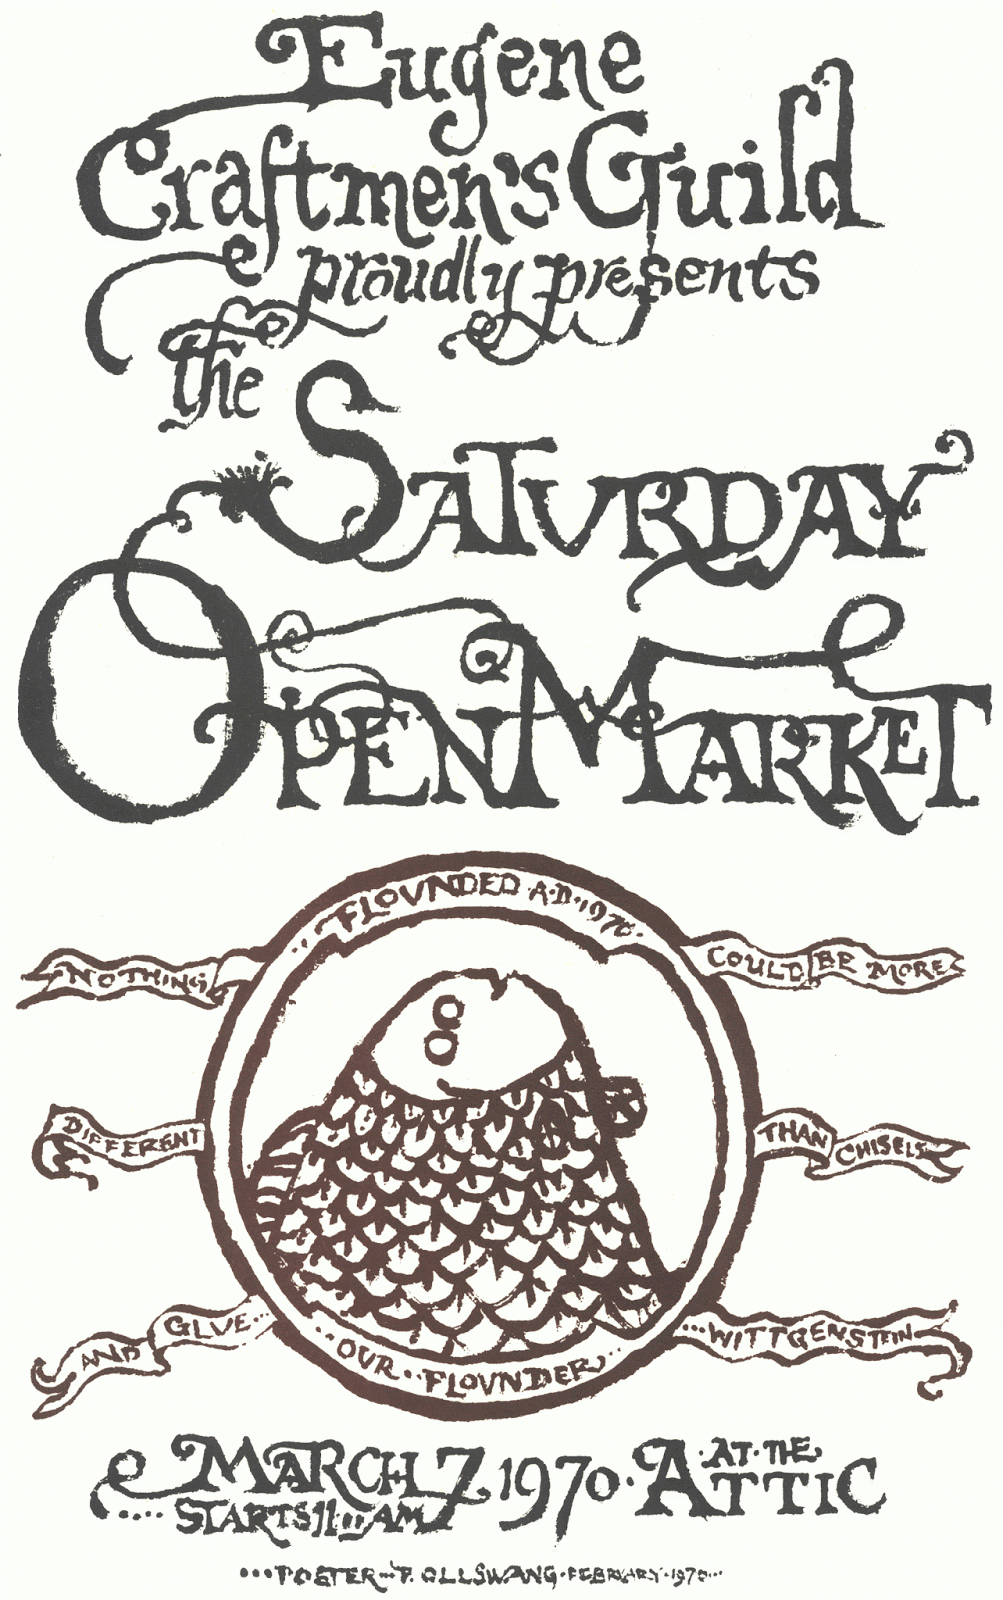 Paul Ollswang's 1970 Saturday Market Poster